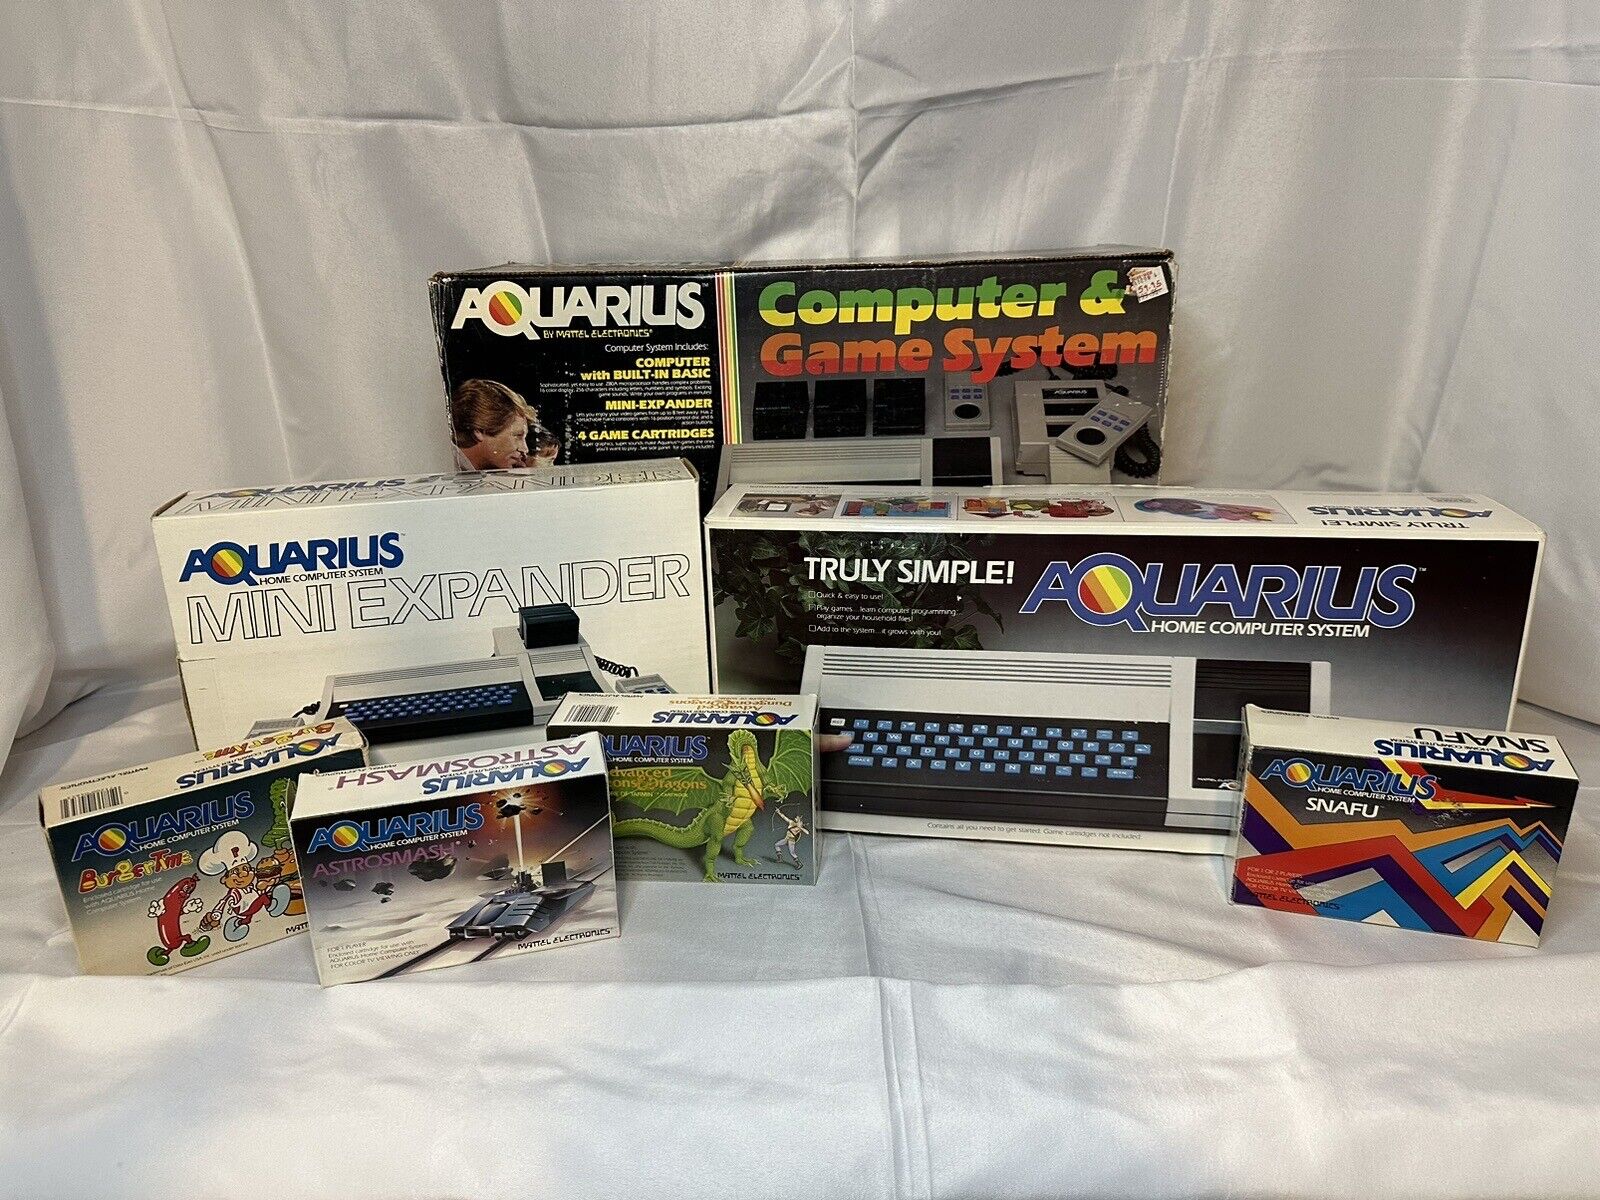 VTG Mattel Aquarius Computer & Game System Mini Expander Games & MATTEL LETTER🔥